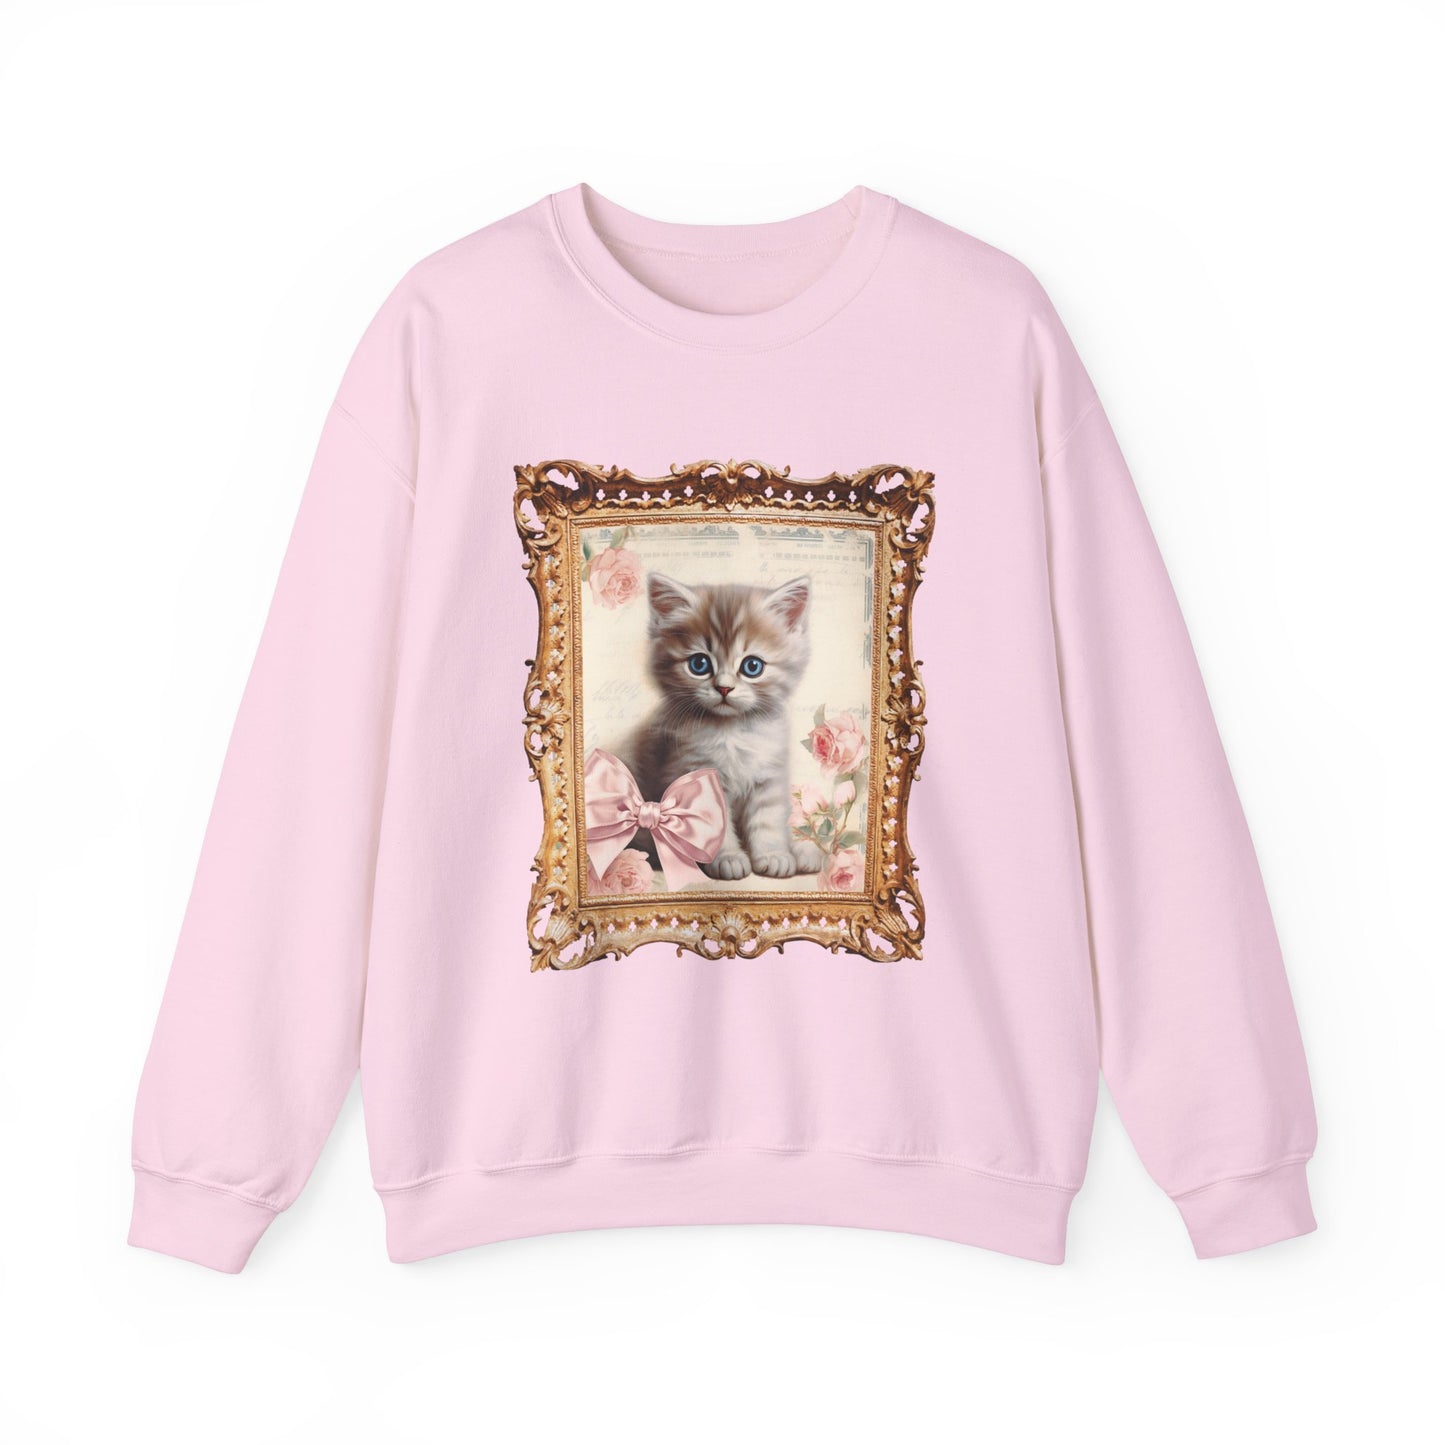 Coquette Kitten In Gilden Victorian Frame Crewneck Sweatshirt